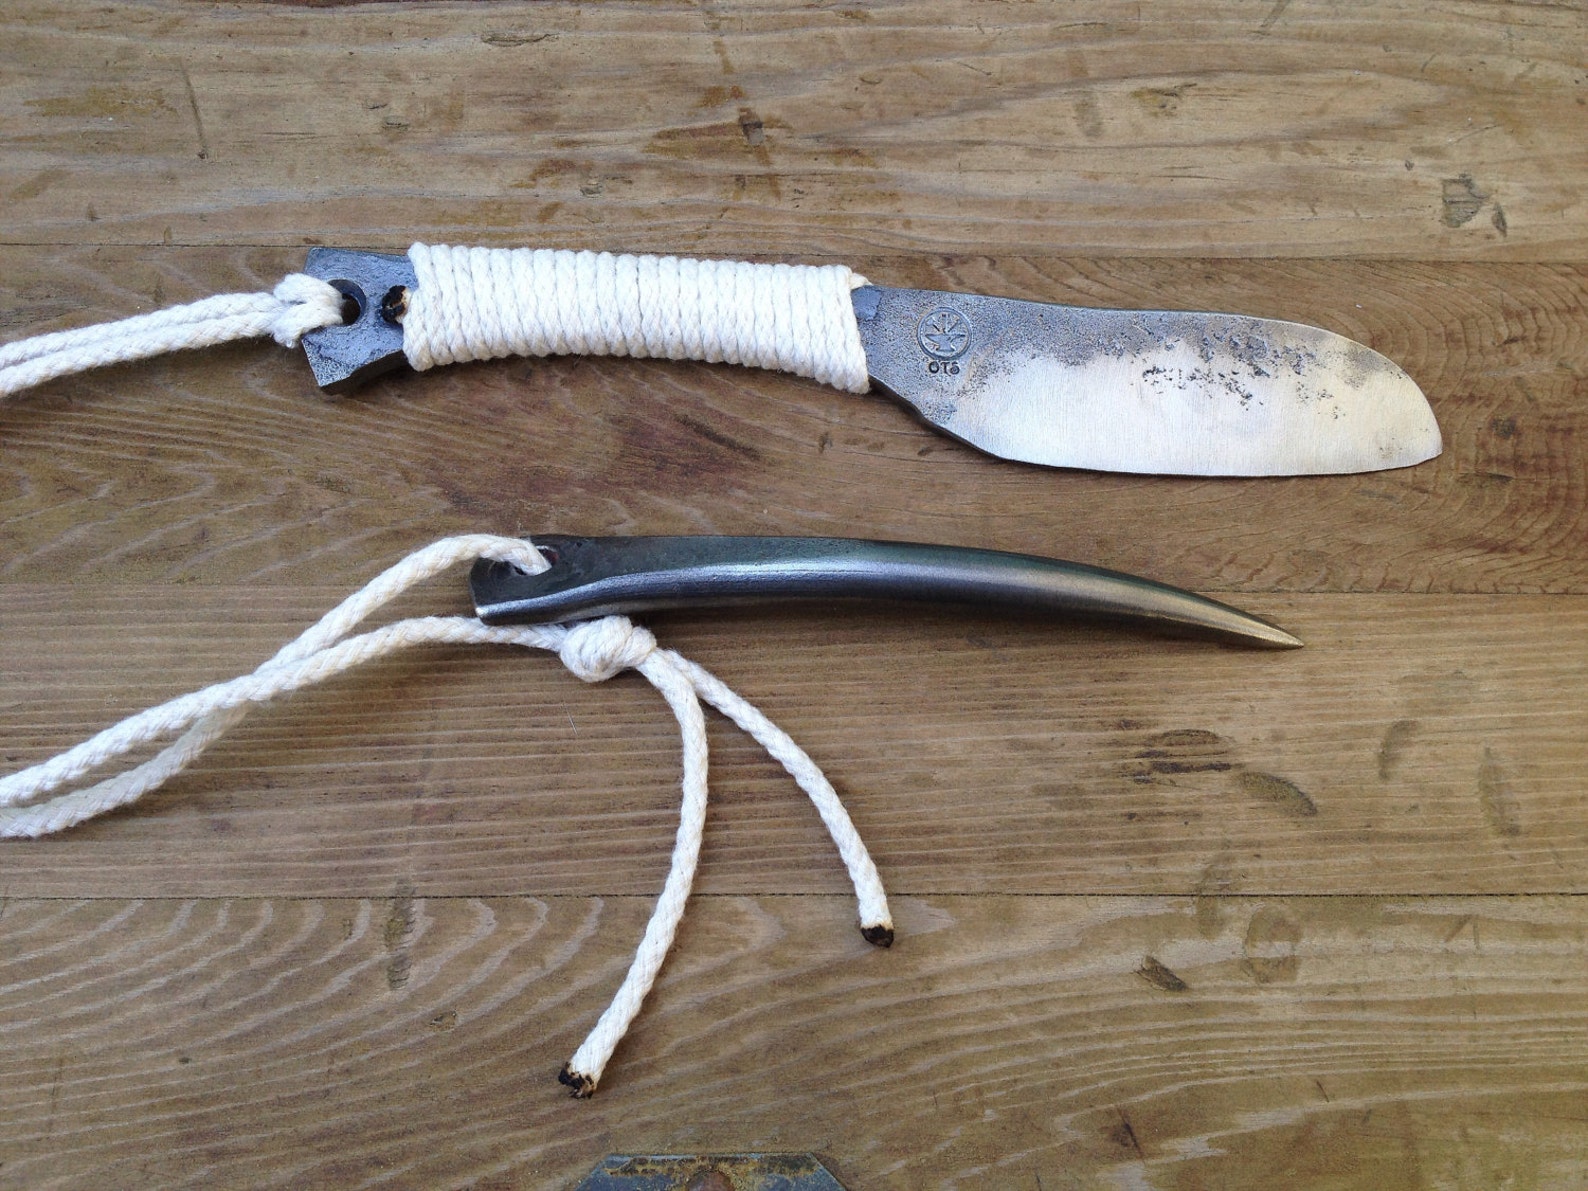 Sailors rigging knife marlin spike set hand forged handmade image 0.